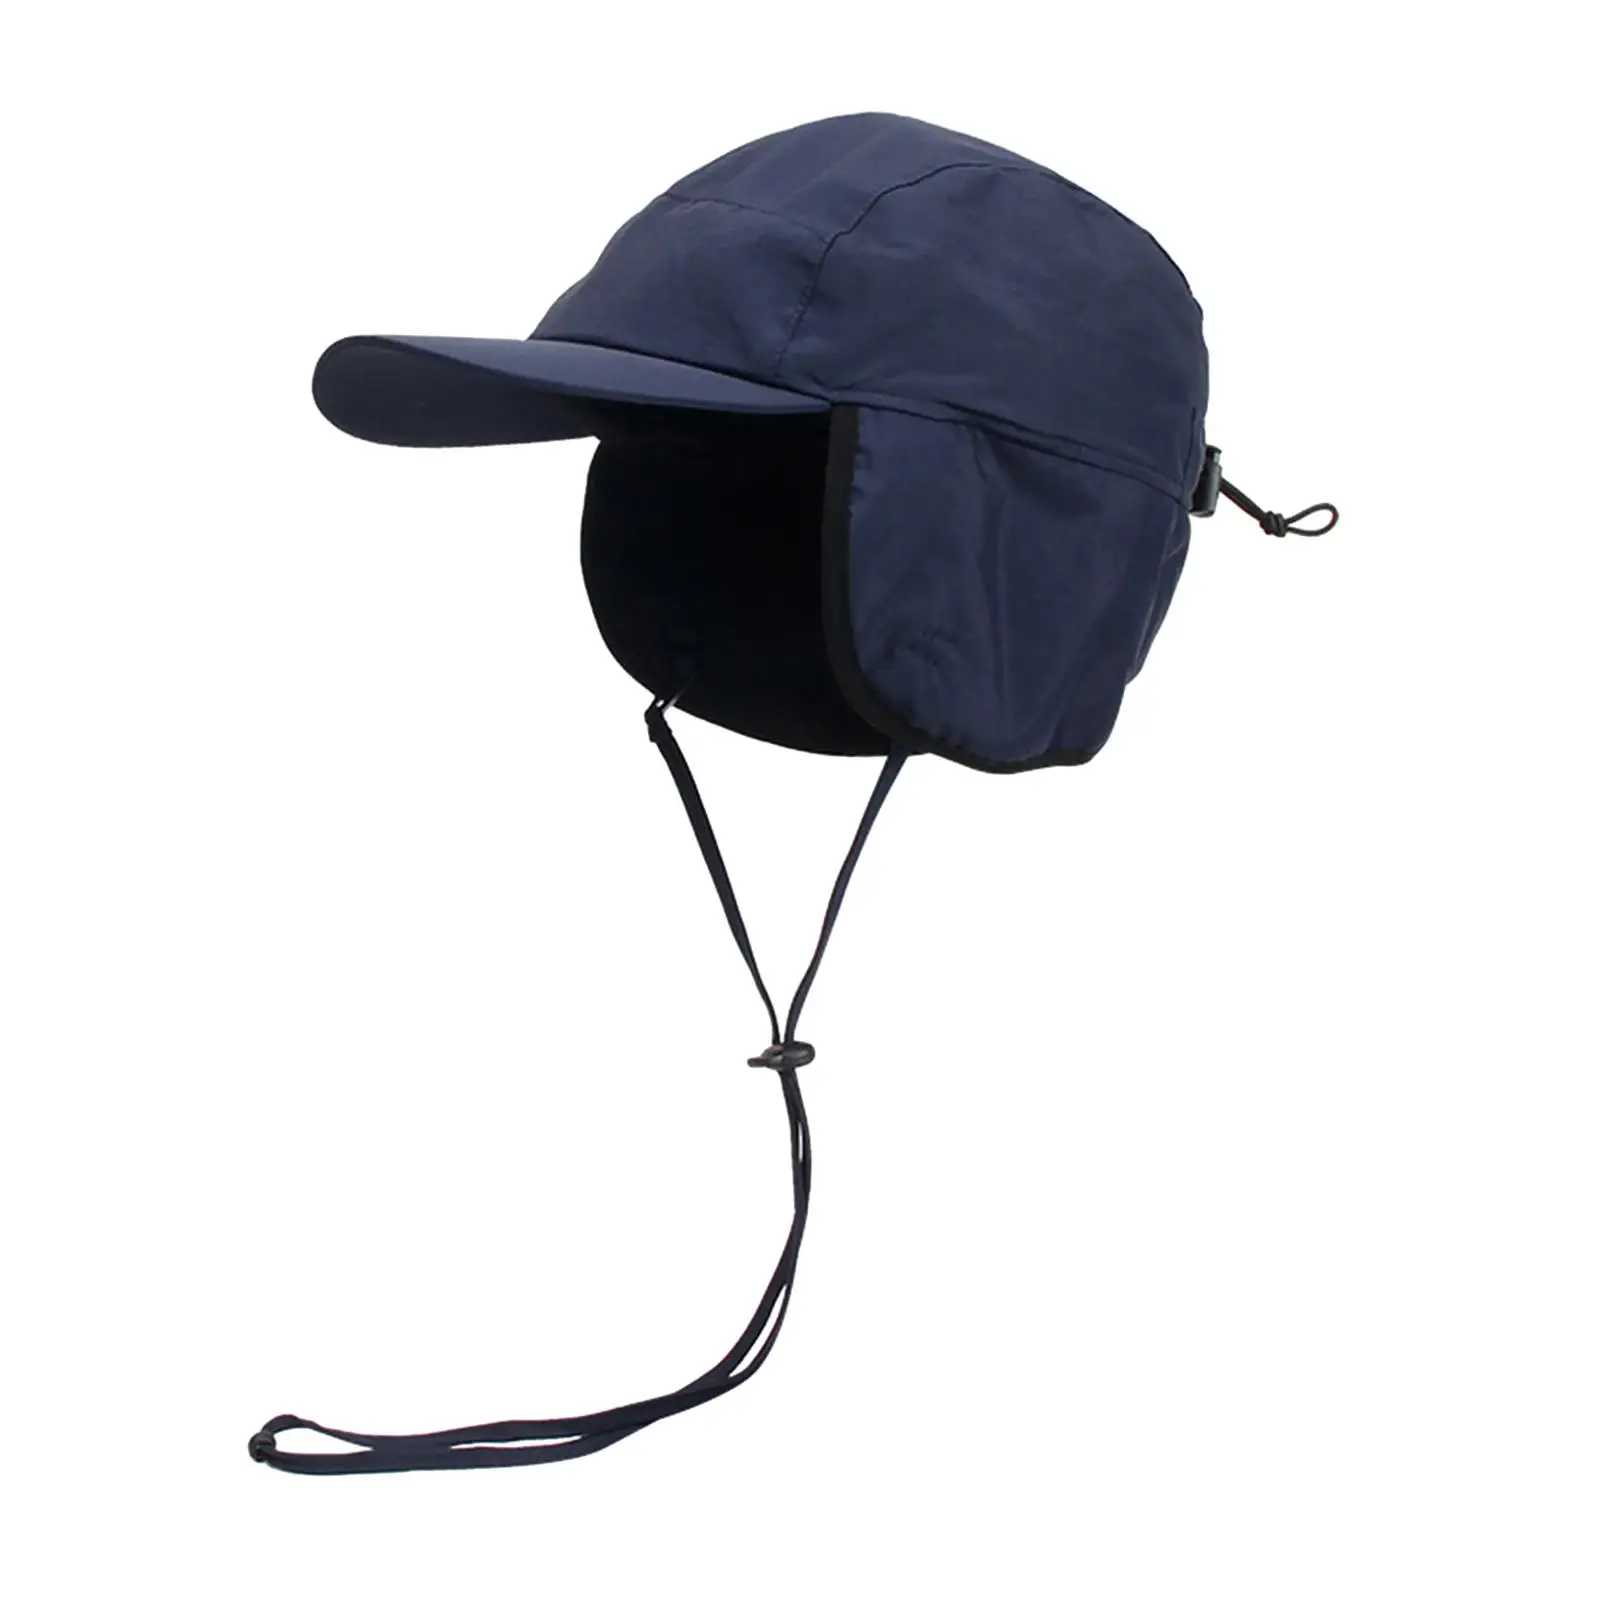 Trapper Hat Fashionable Autumn Casual Headwear Adjustable Waterproof Snow Hat Winter Hat for Running Biking Hiking Ski Cycling